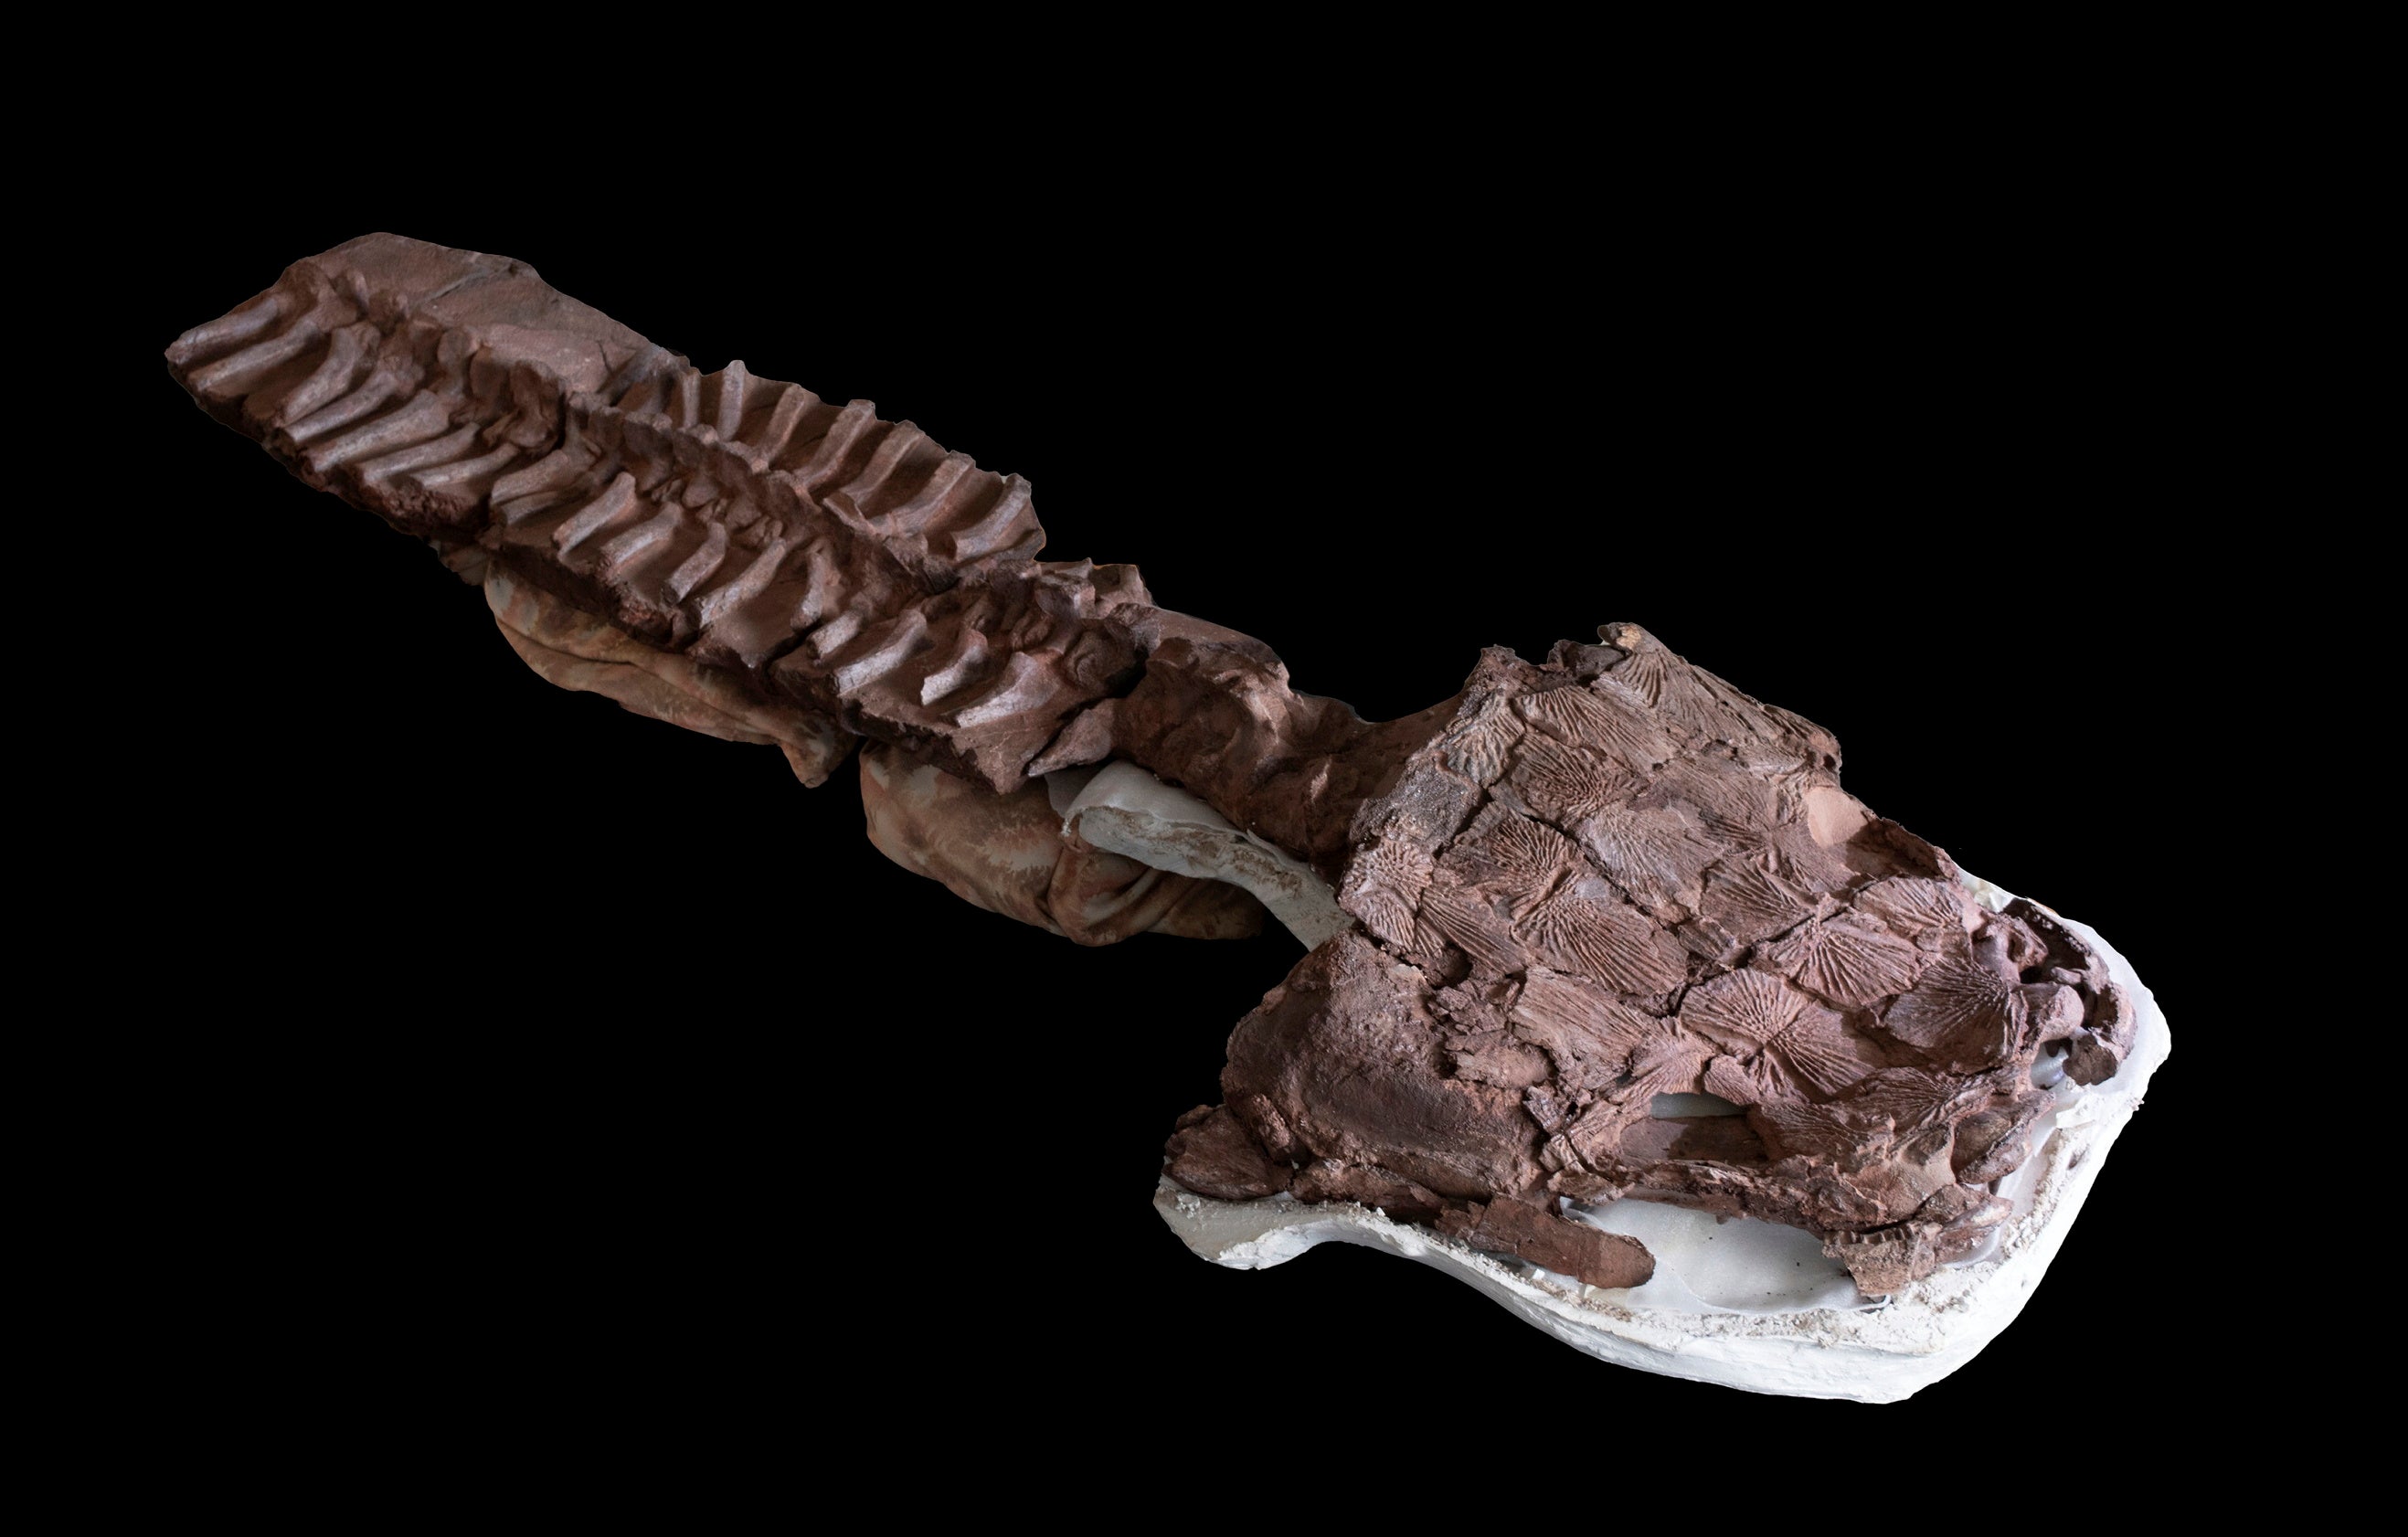 Fossil skeleton, including the skull and backbone, of Gaiasia jennyae